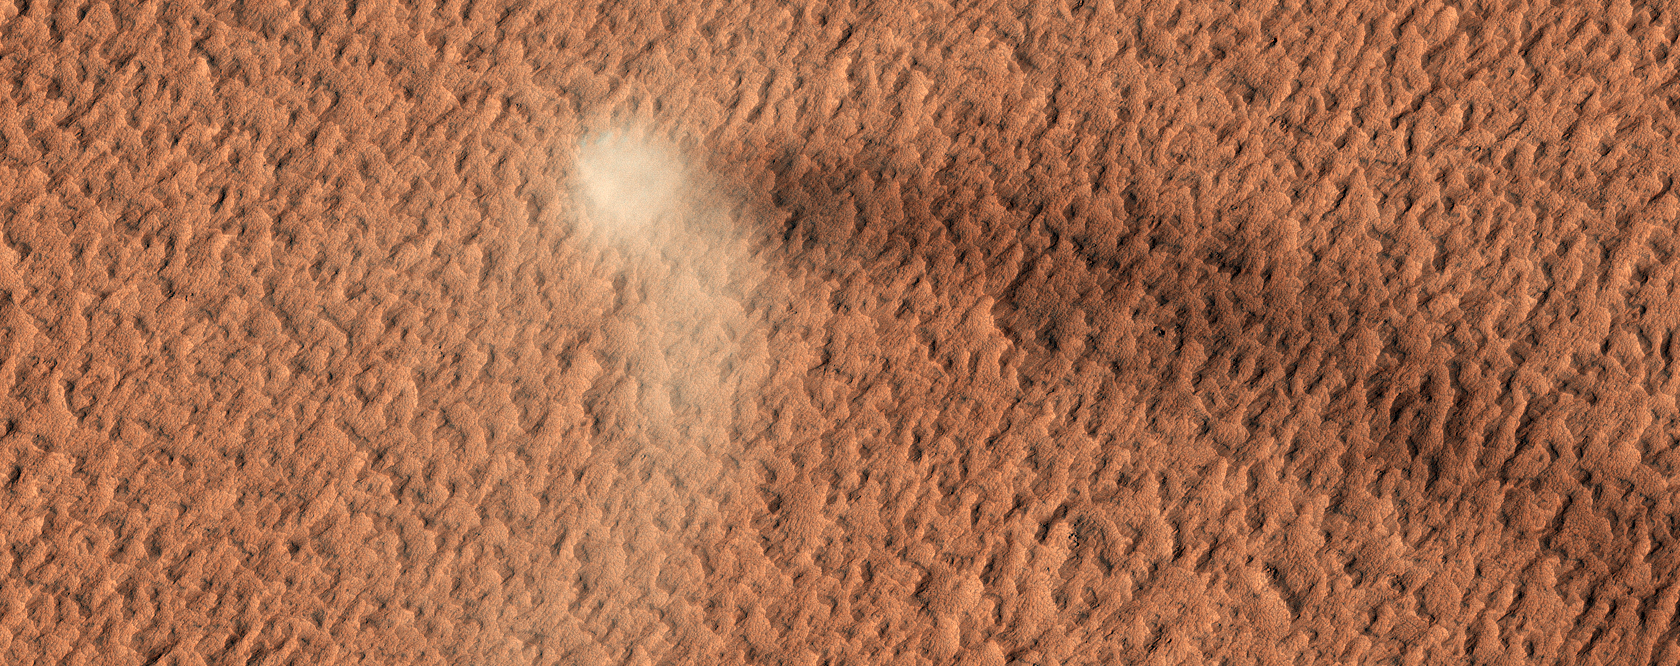 Planet Mars sand storm